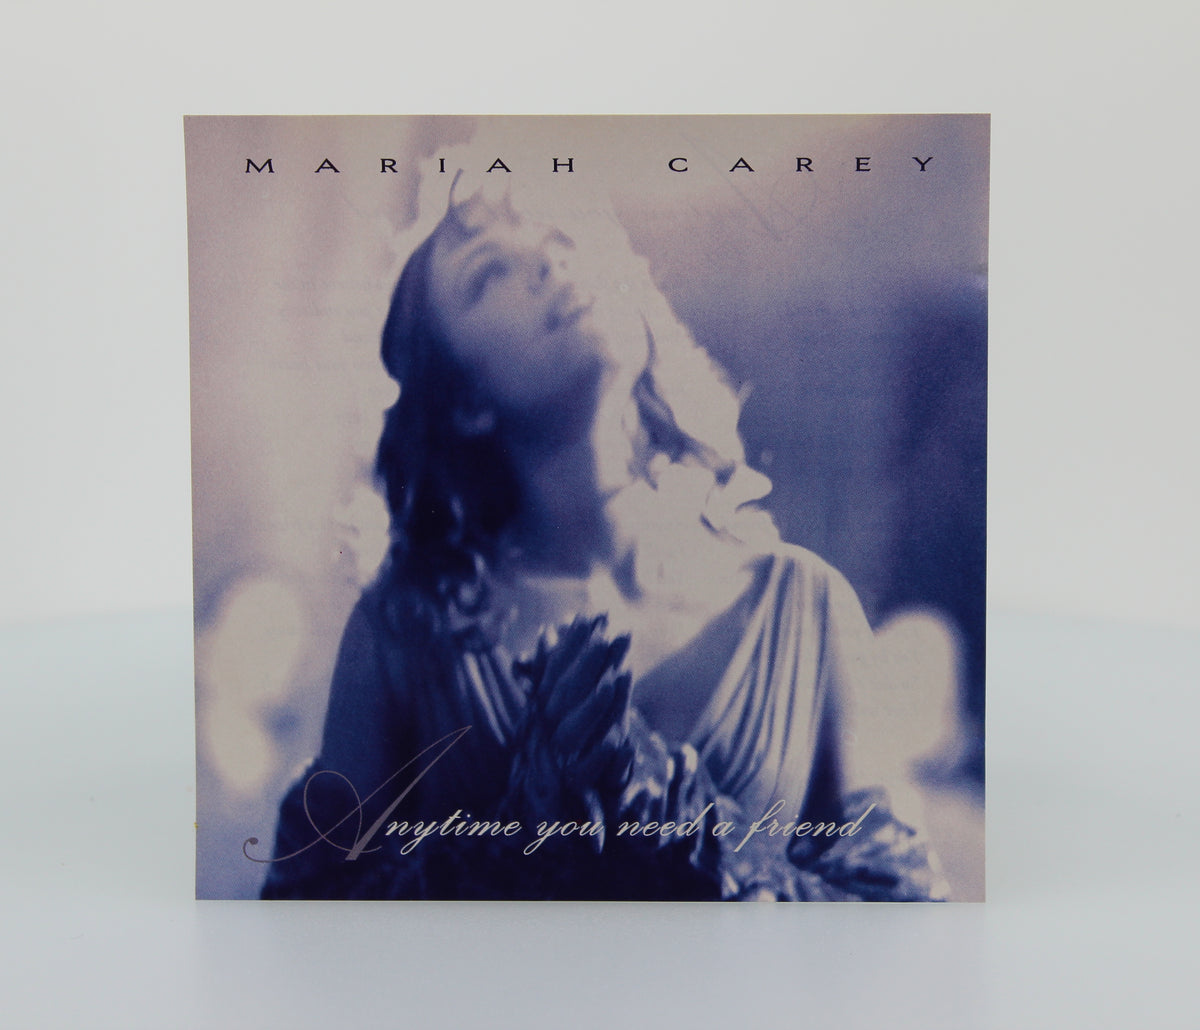 Mariah Carey, Anytime You Need A Friend, CD Single Promo, US 1994 (CD 659)